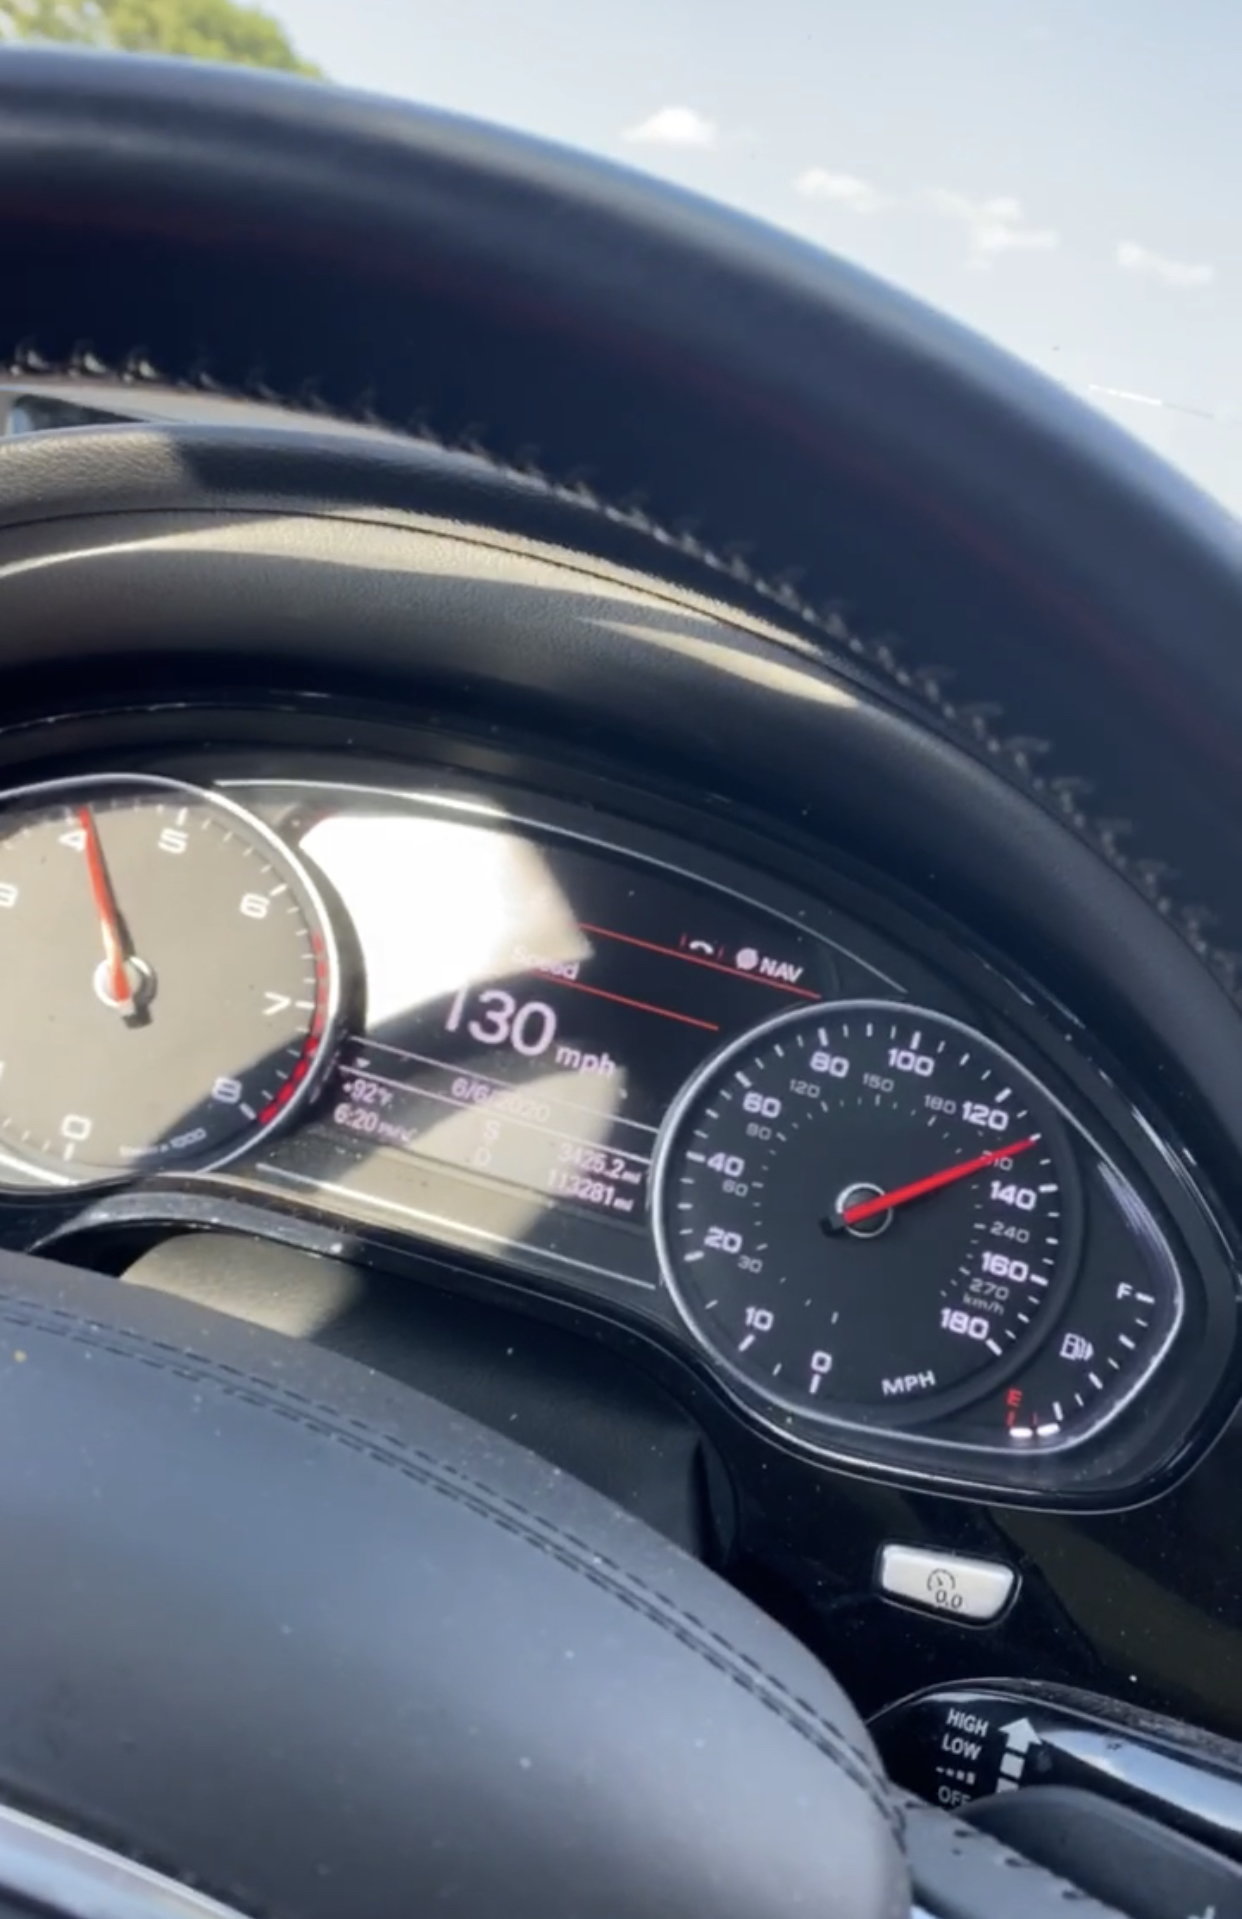 Top Speed? AudiWorld Forums